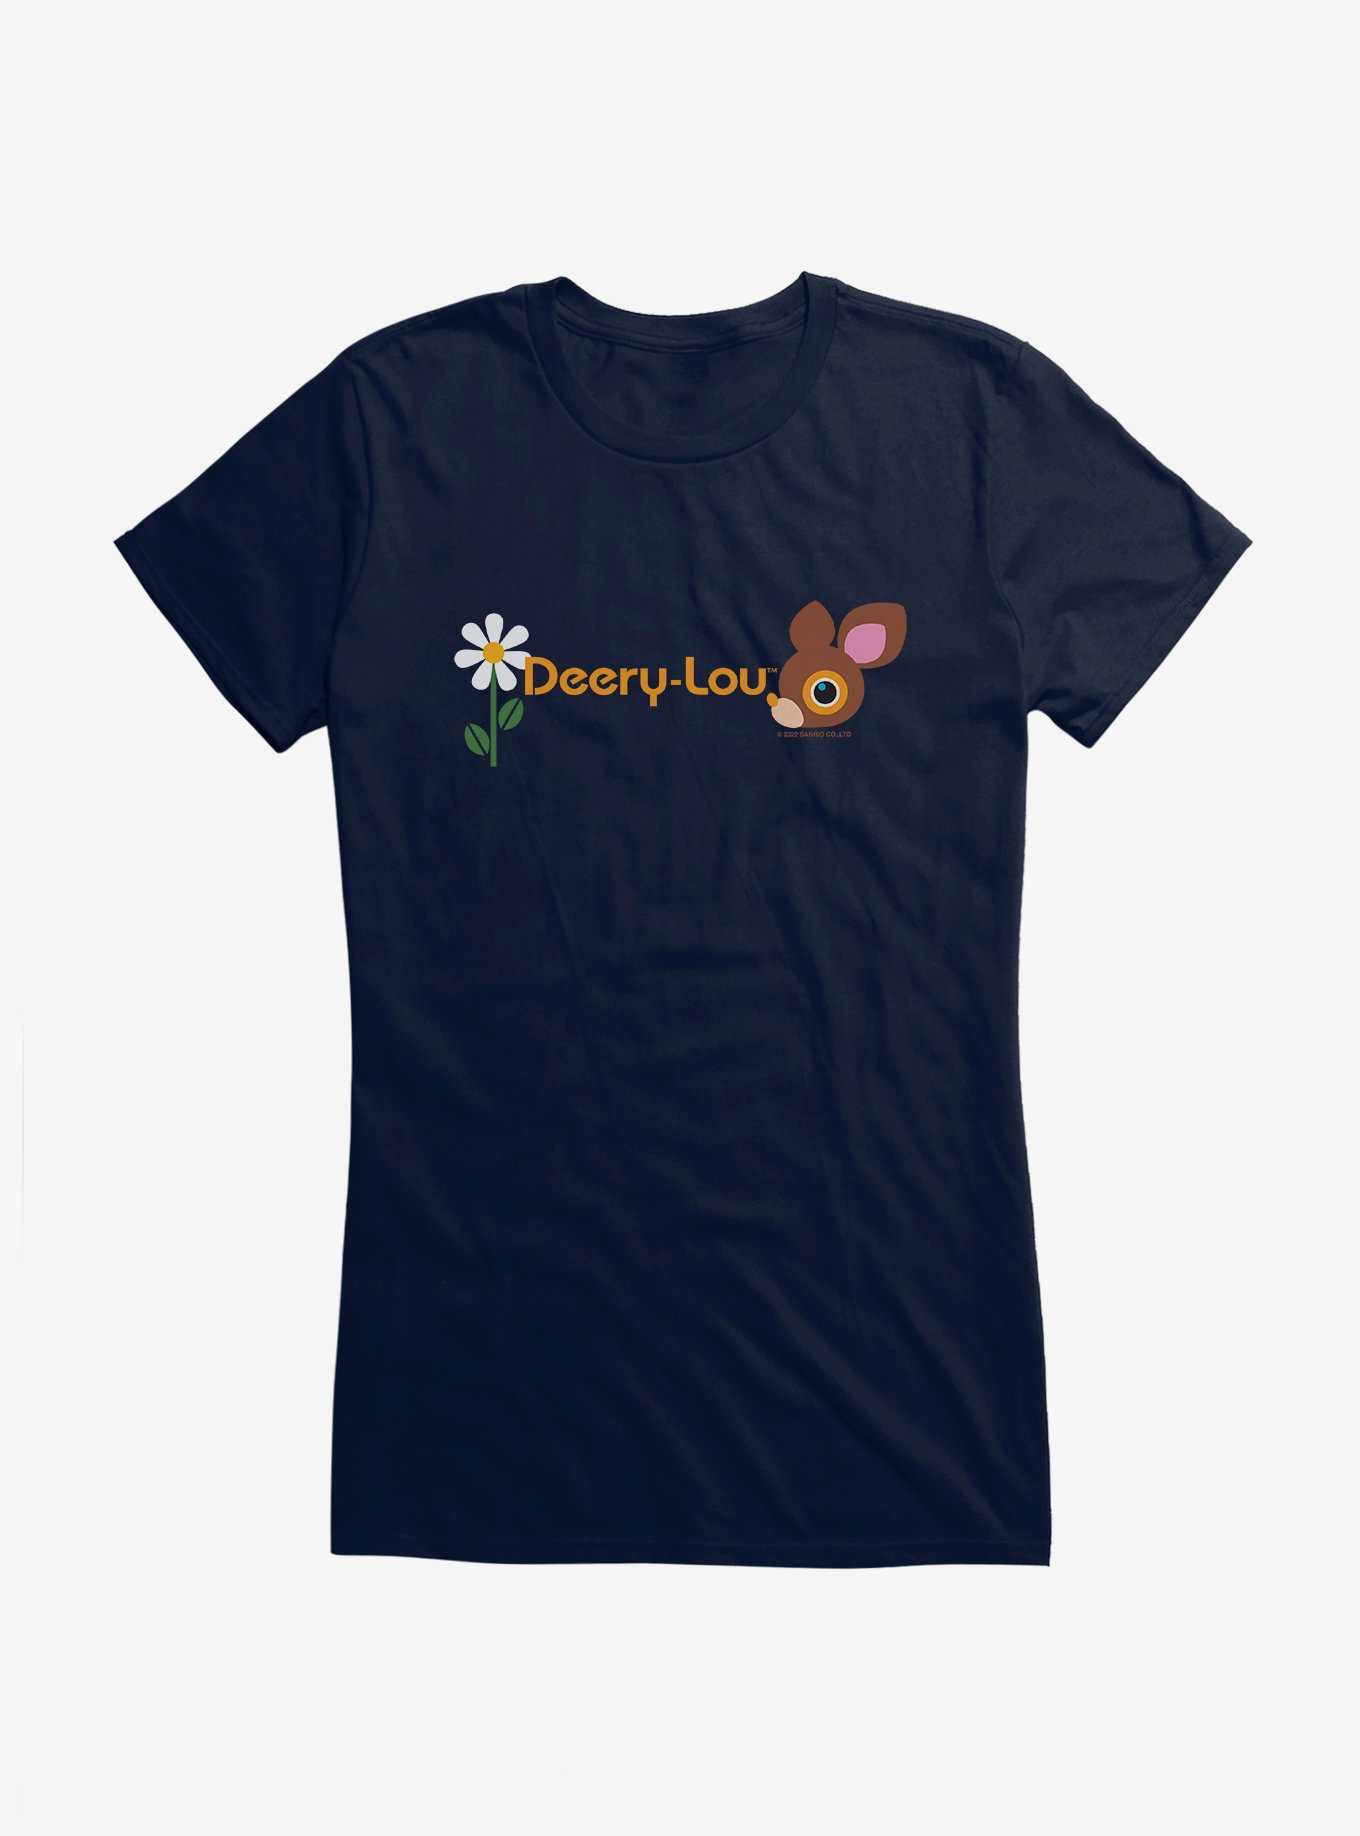 Deery-Lou Flower Logo Girls T-Shirt, NAVY, hi-res